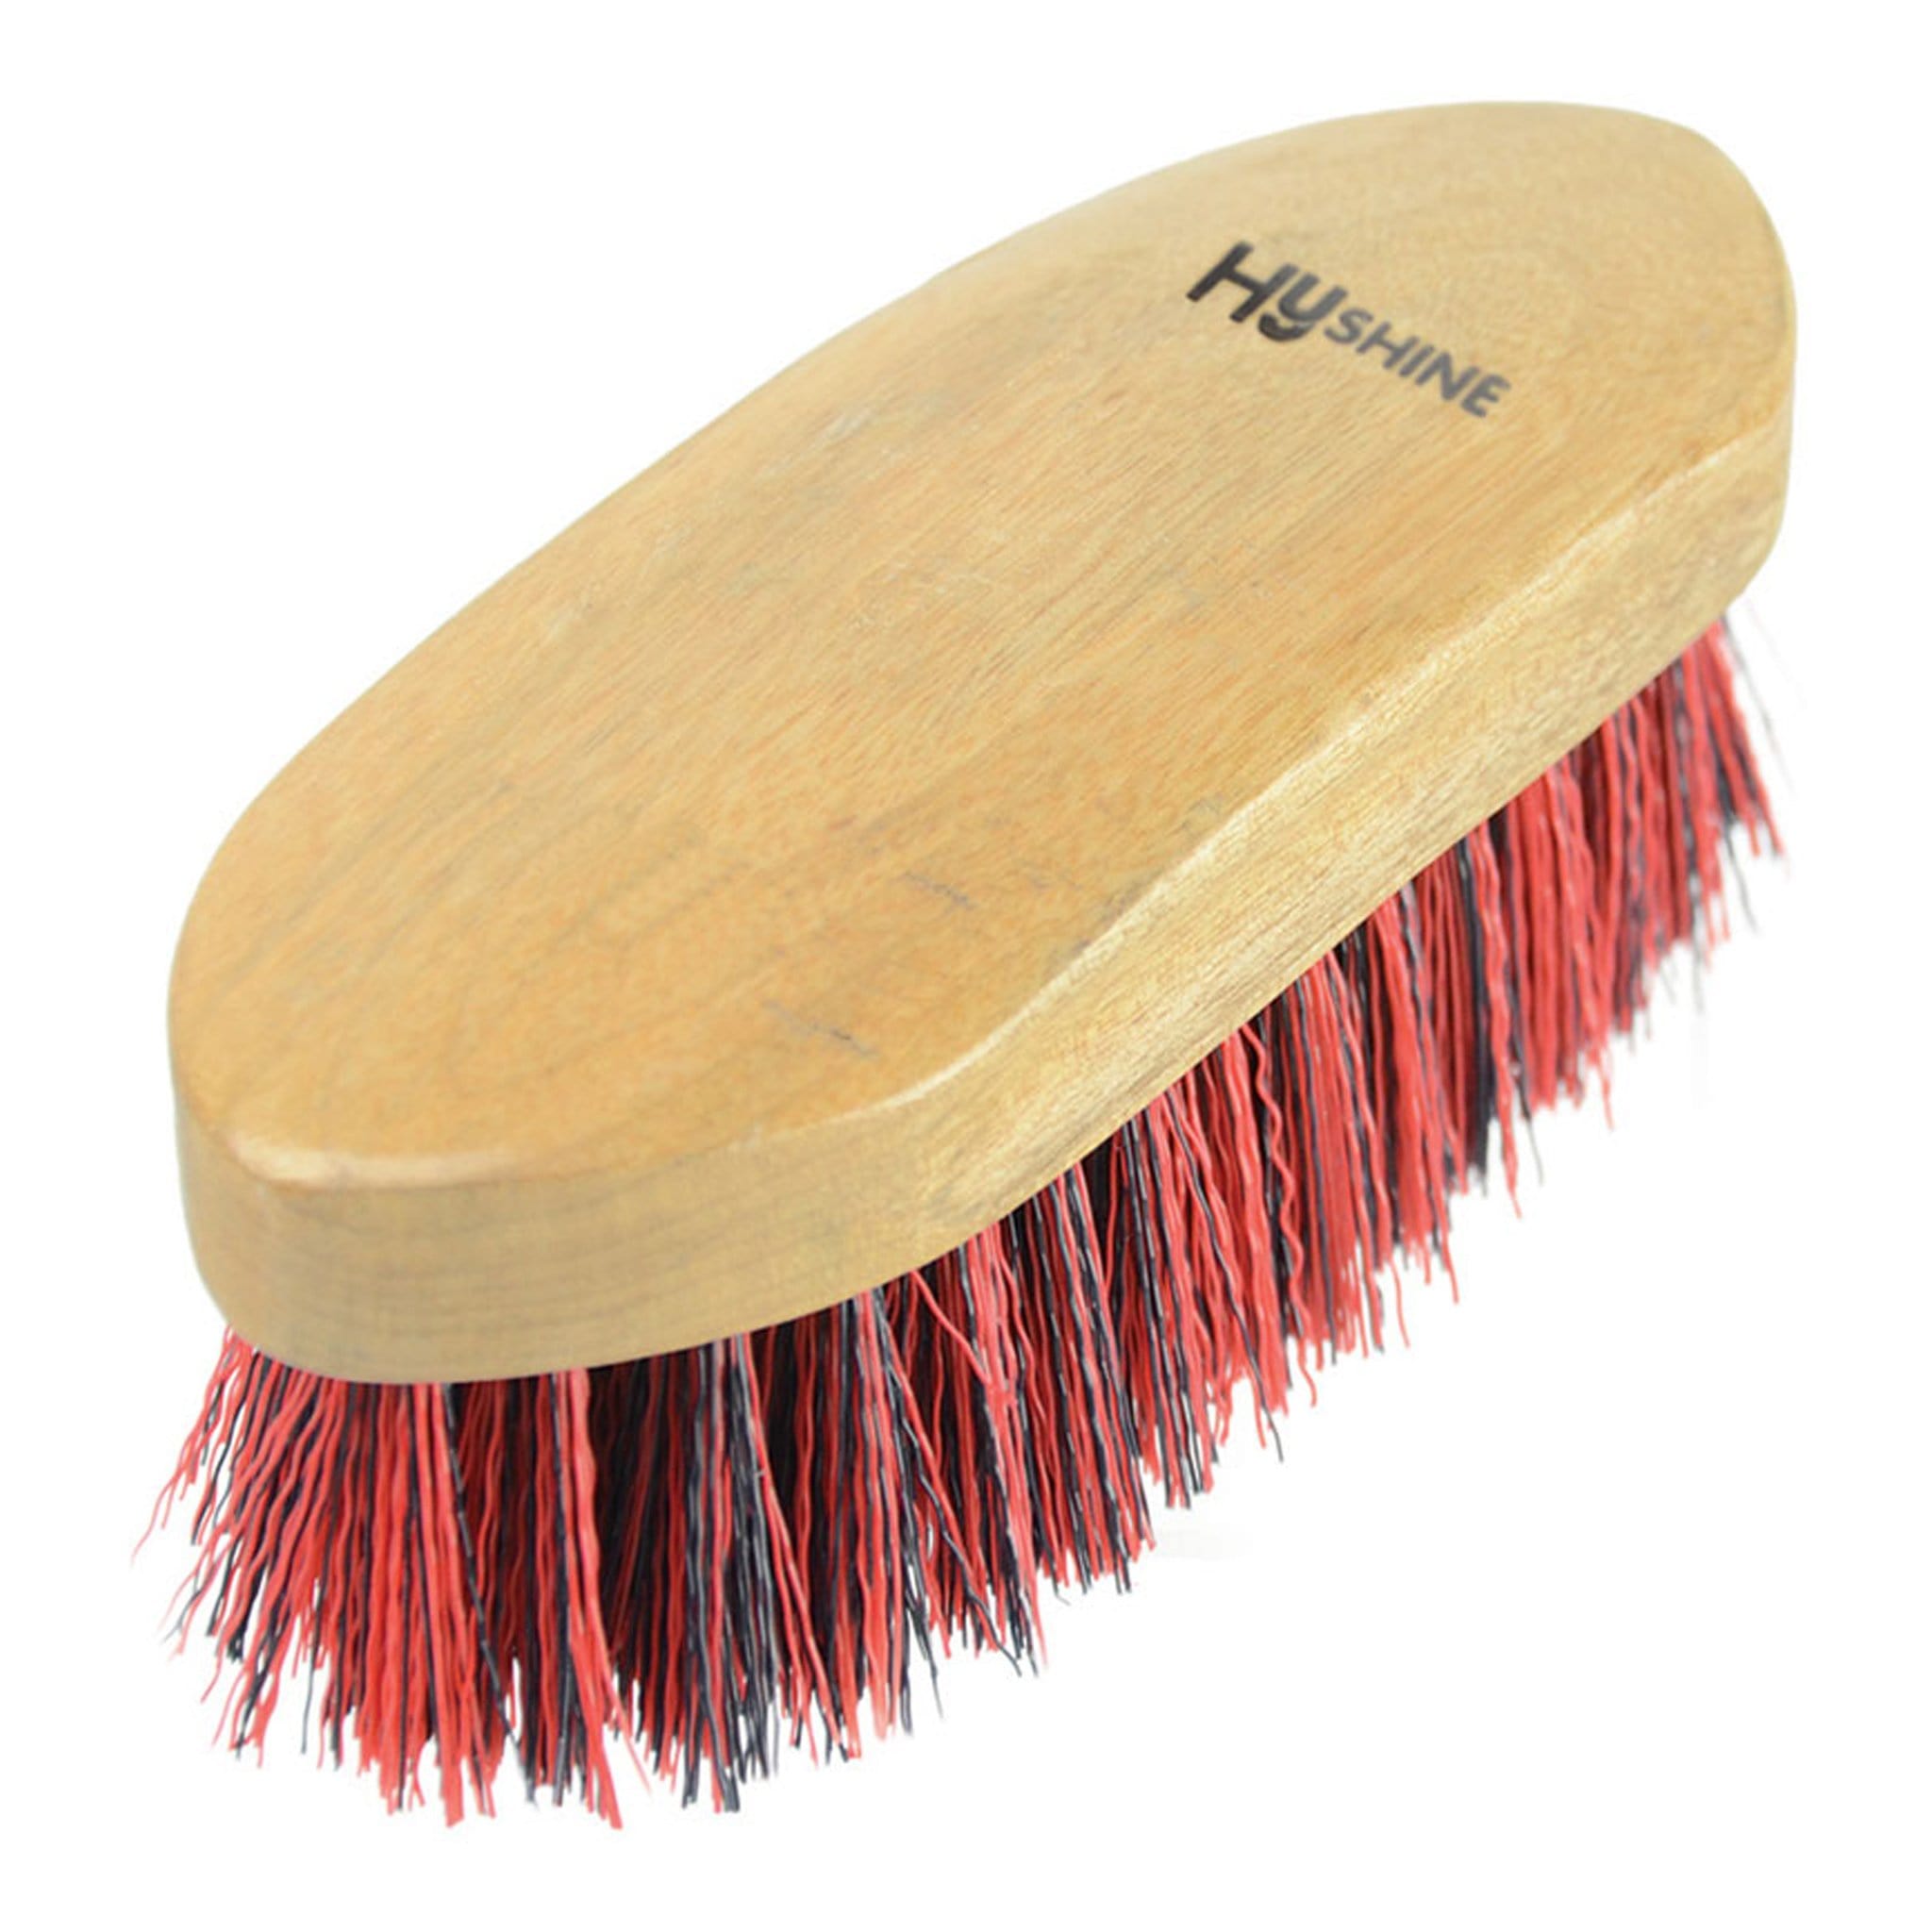 HySHINE Natural Wooden Dandy Brush Medium 4552 Red